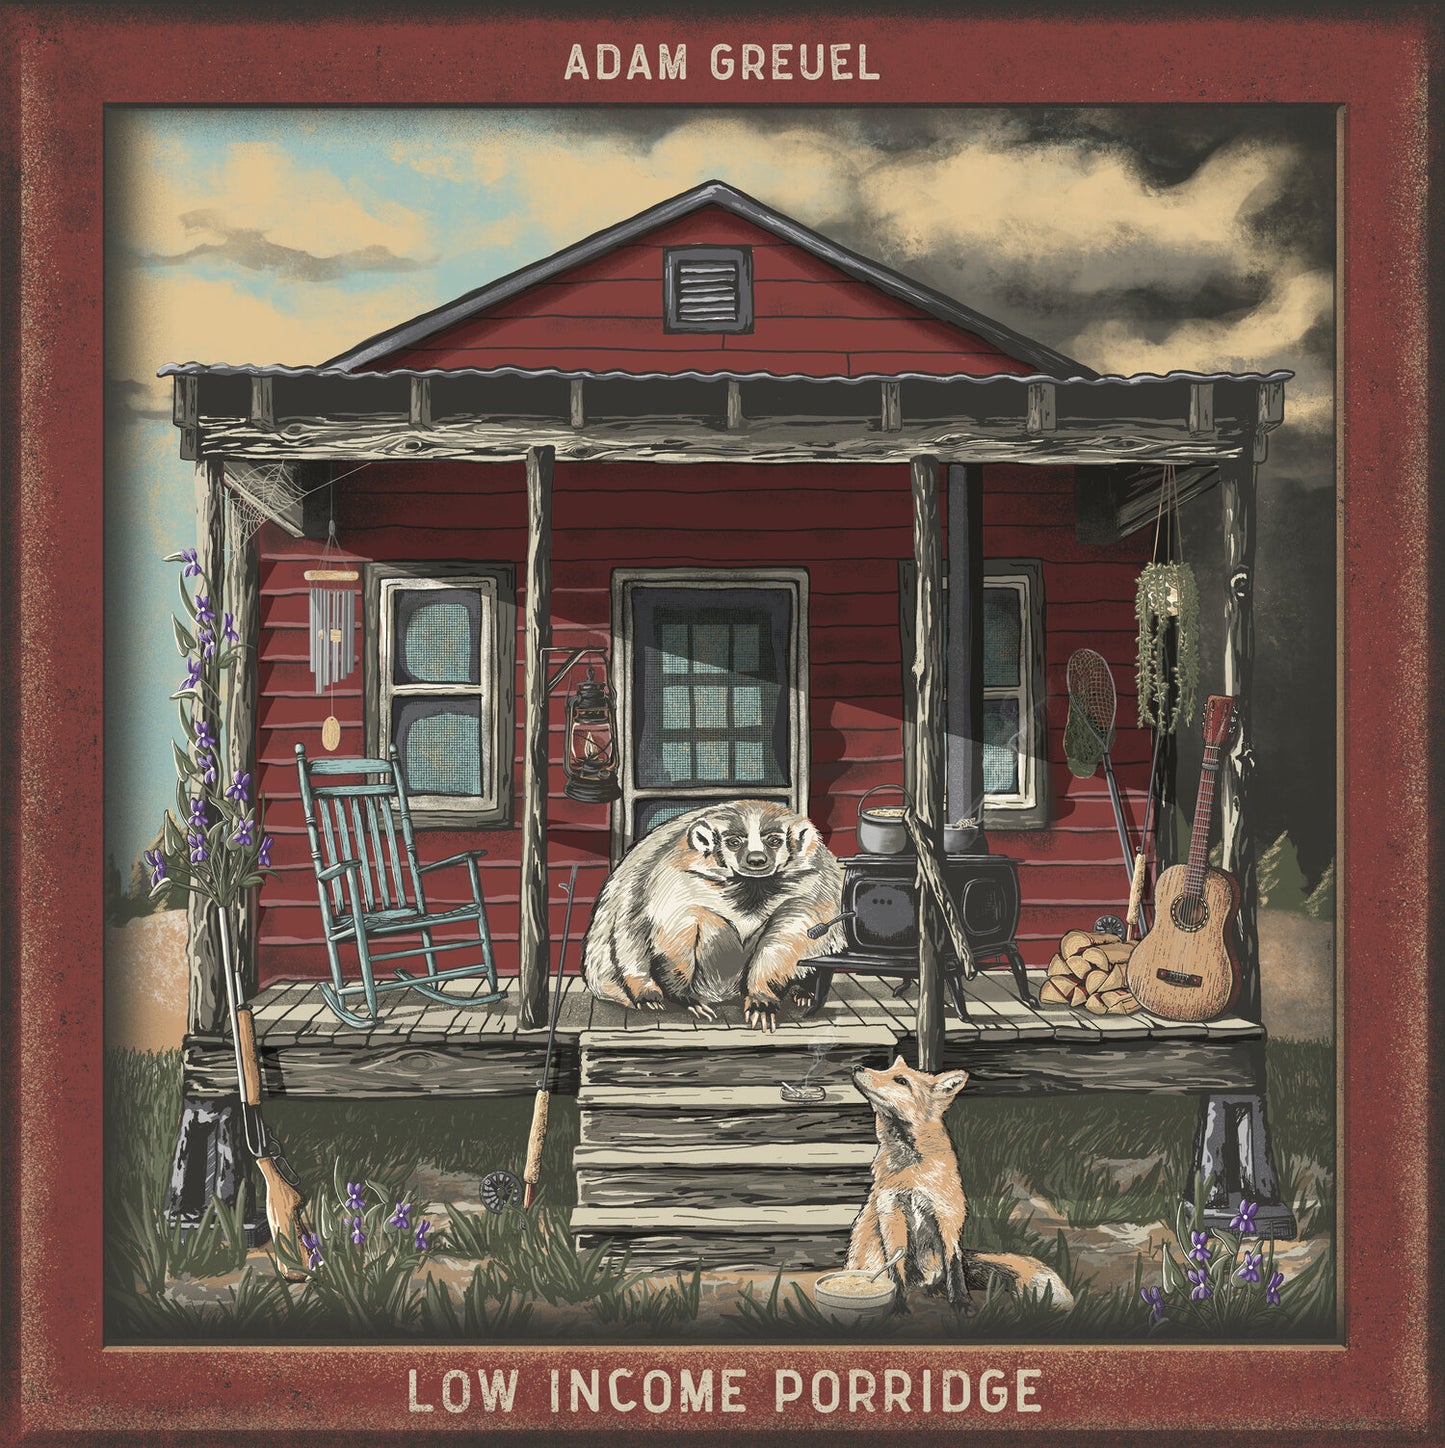 Adam Greuel’s Low Income Porridge